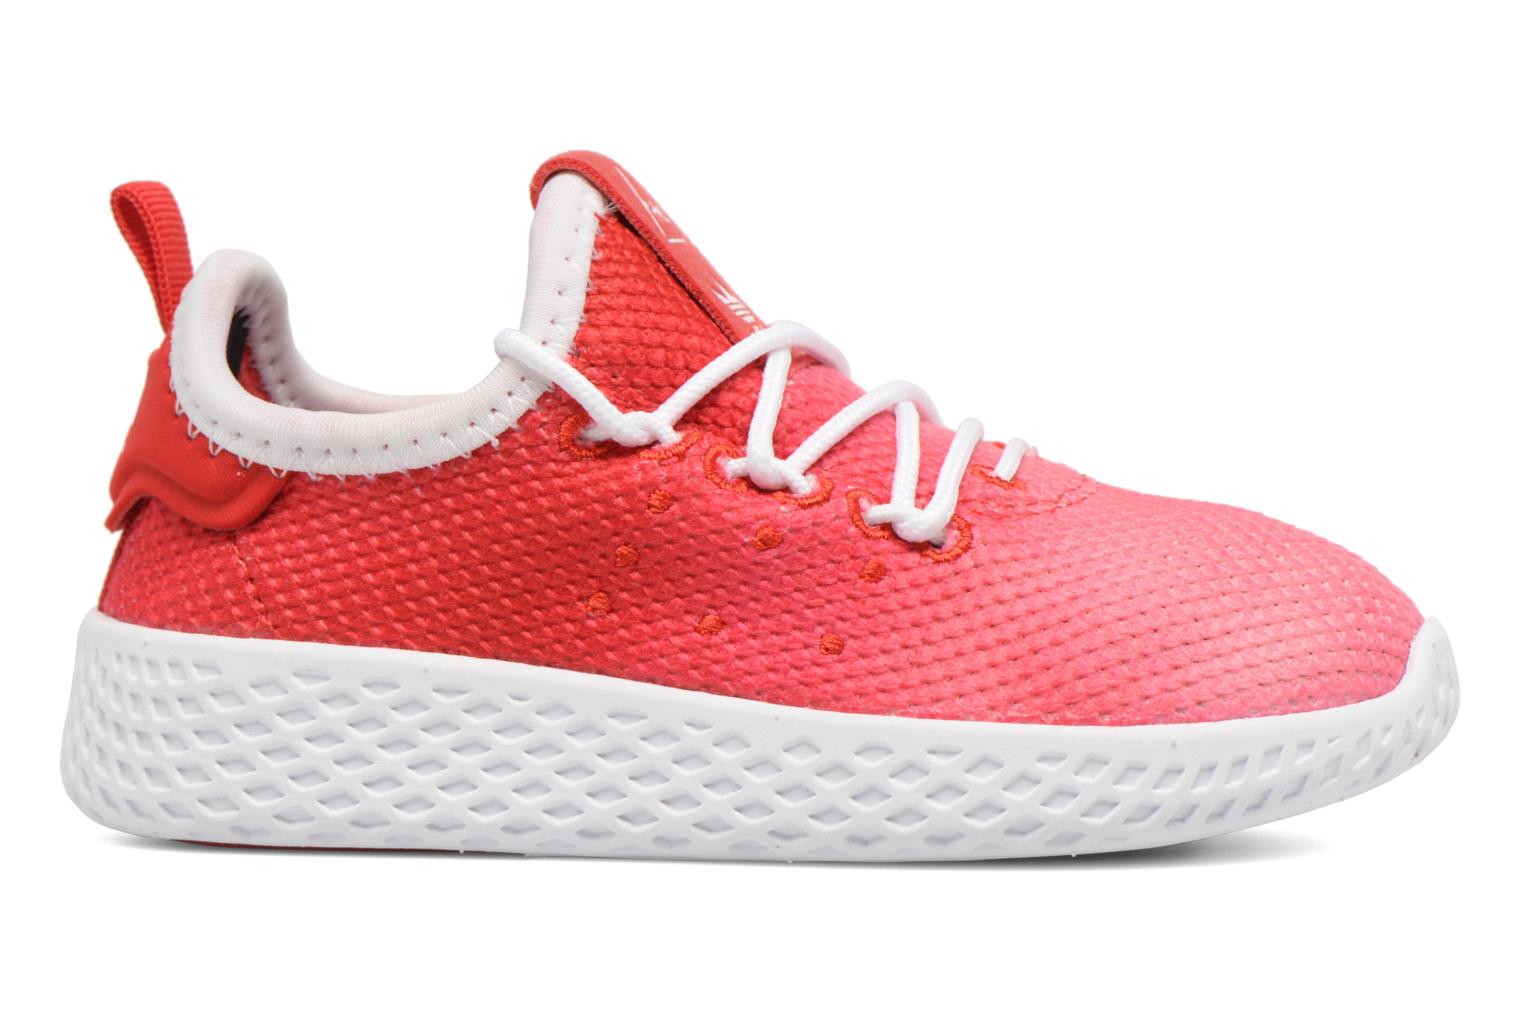 Bambino Adidas Originals Pharrell Williams Tennis Hu I Sneakers Arancione -  | eBay